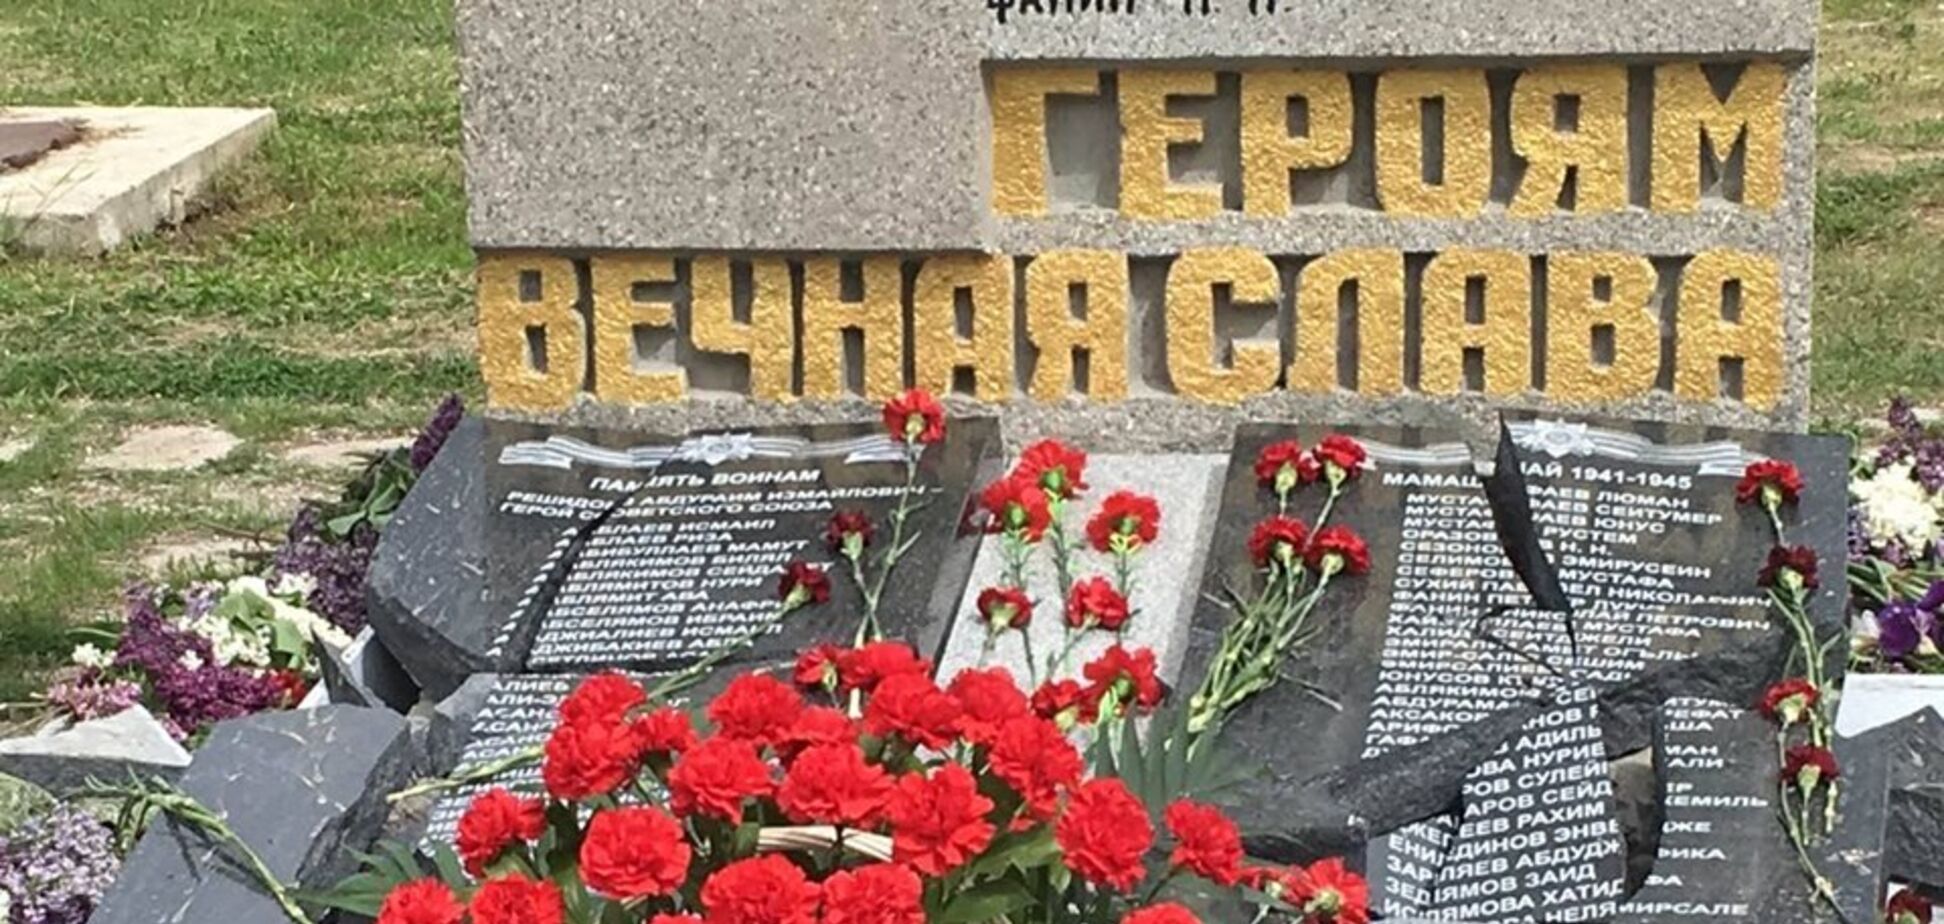 Под Севастополем разгромили памятник с погибшими на войне крымскими татарами